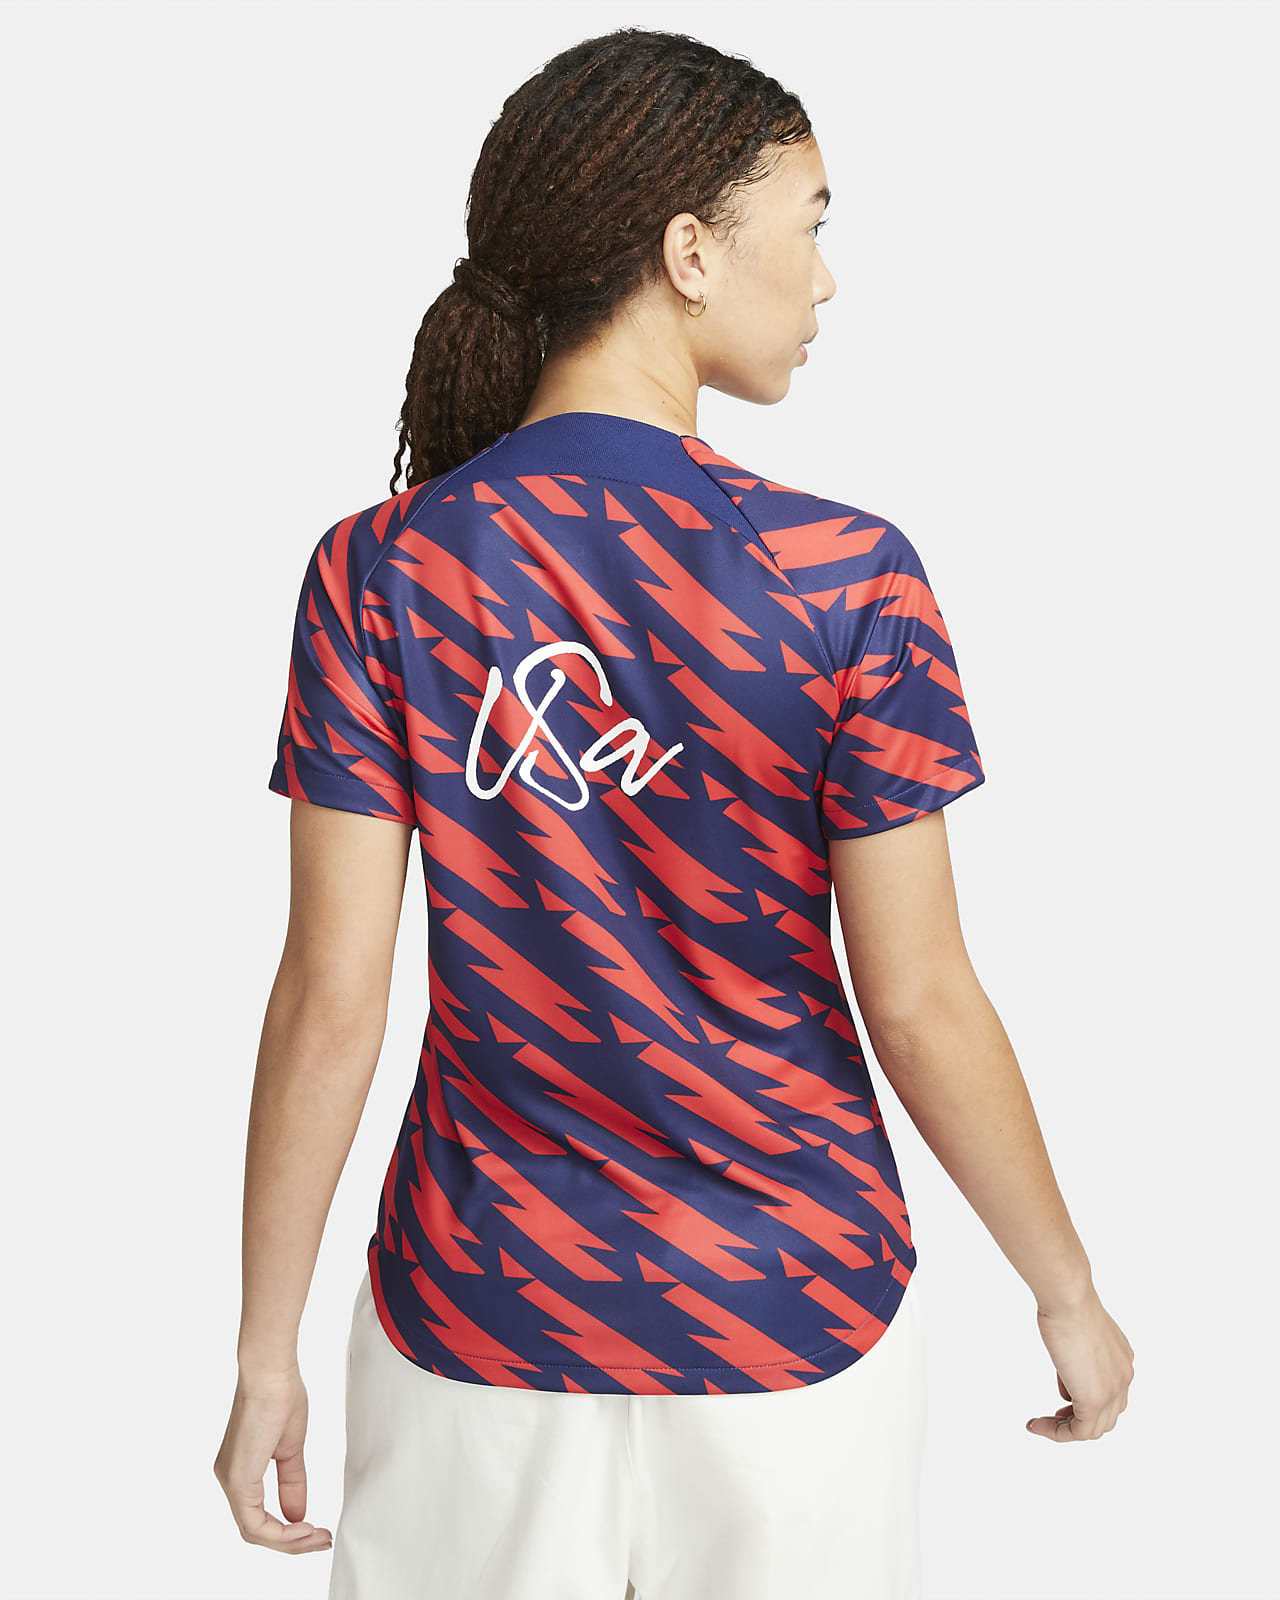 2021 Basketball Warm Up Short Sleeve DriFit T-Shirt (Mens/Ladies/Youth)